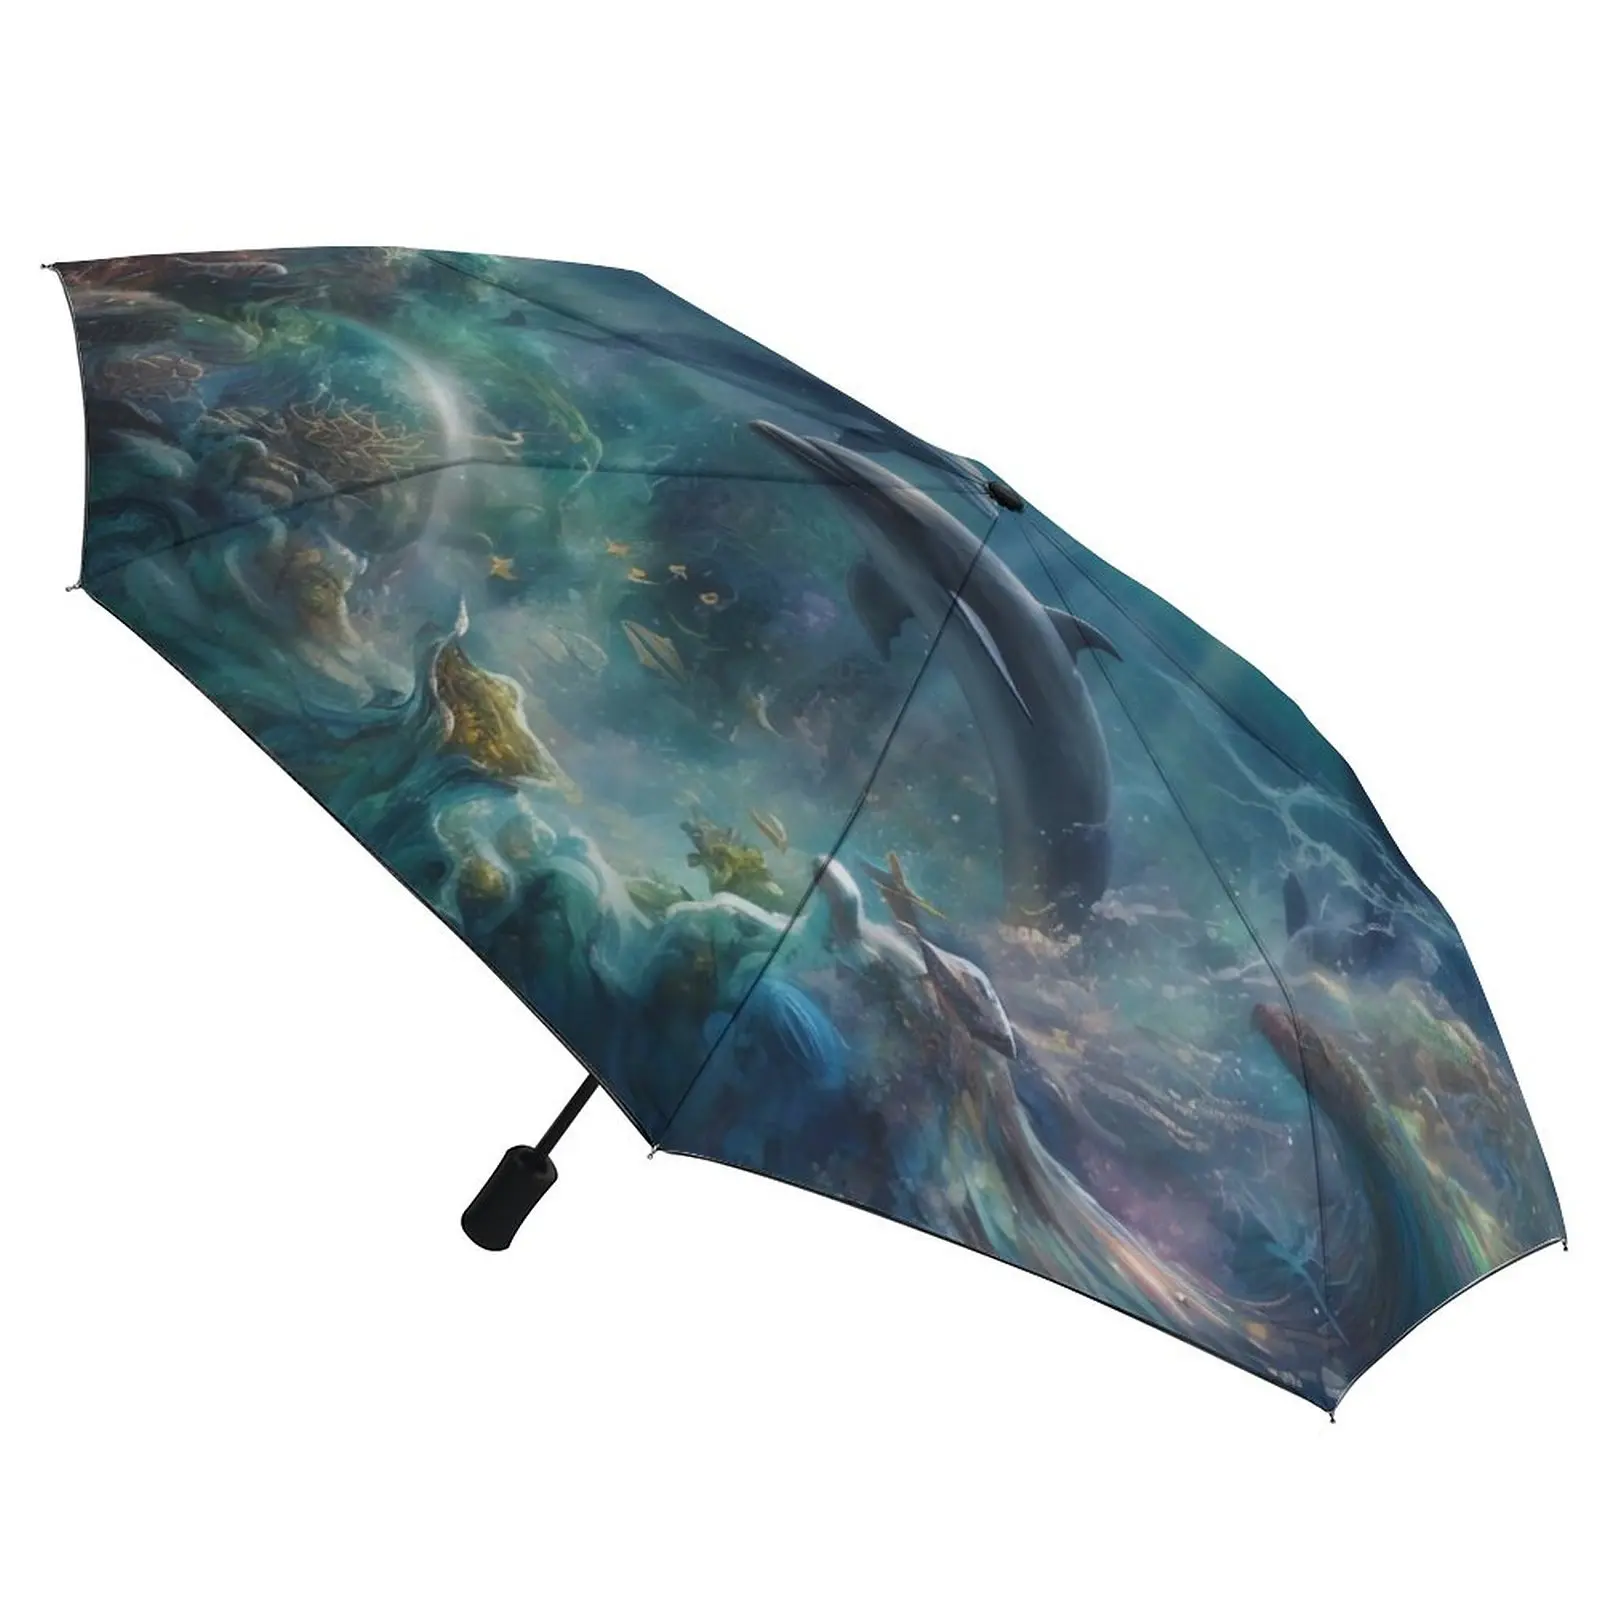 Dolphin 3 Fold Auto Umbrella Mystical Realms  Harmonious Wind Resistant Umbrella Black Coat Ligthweight Umbrellas for Female